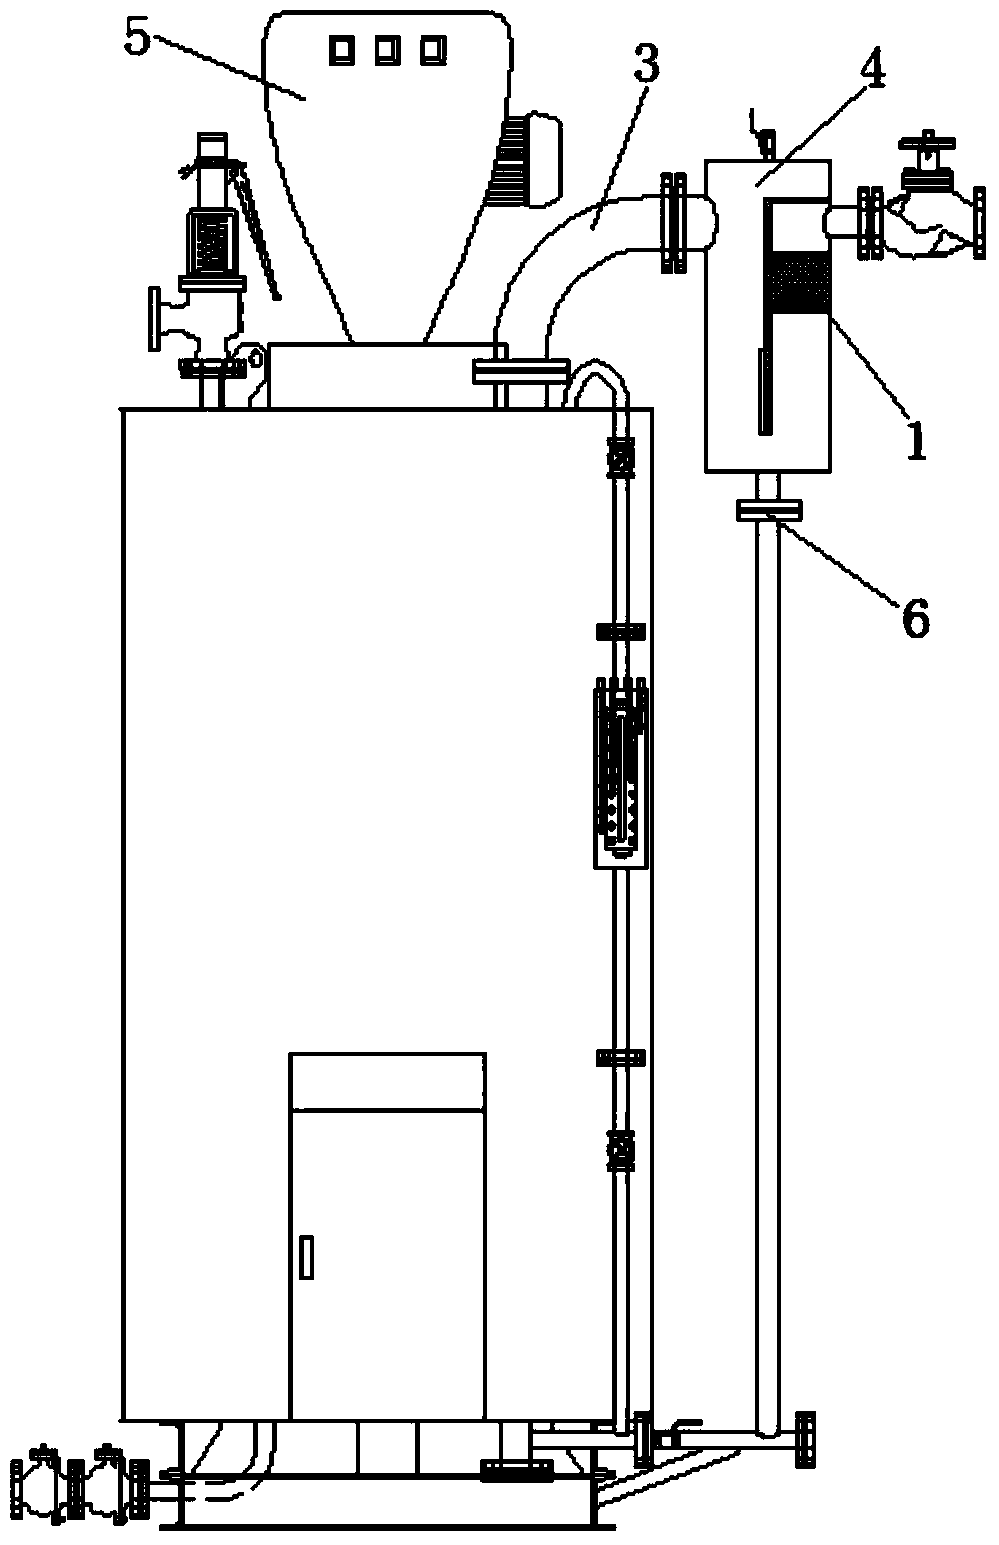 Steam-water separation type fuel-gas vertical straight-flow steam boiler